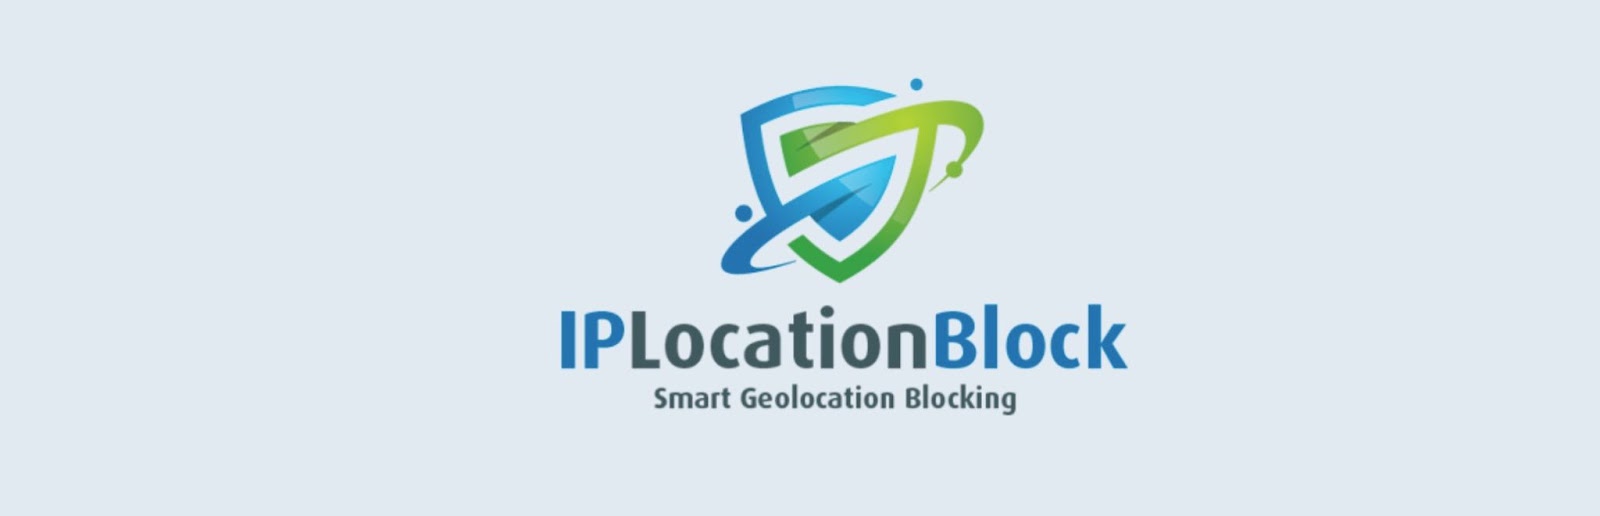 WordPress plugin to block countries, the IP Location Block plugin listing image at WordPress.org